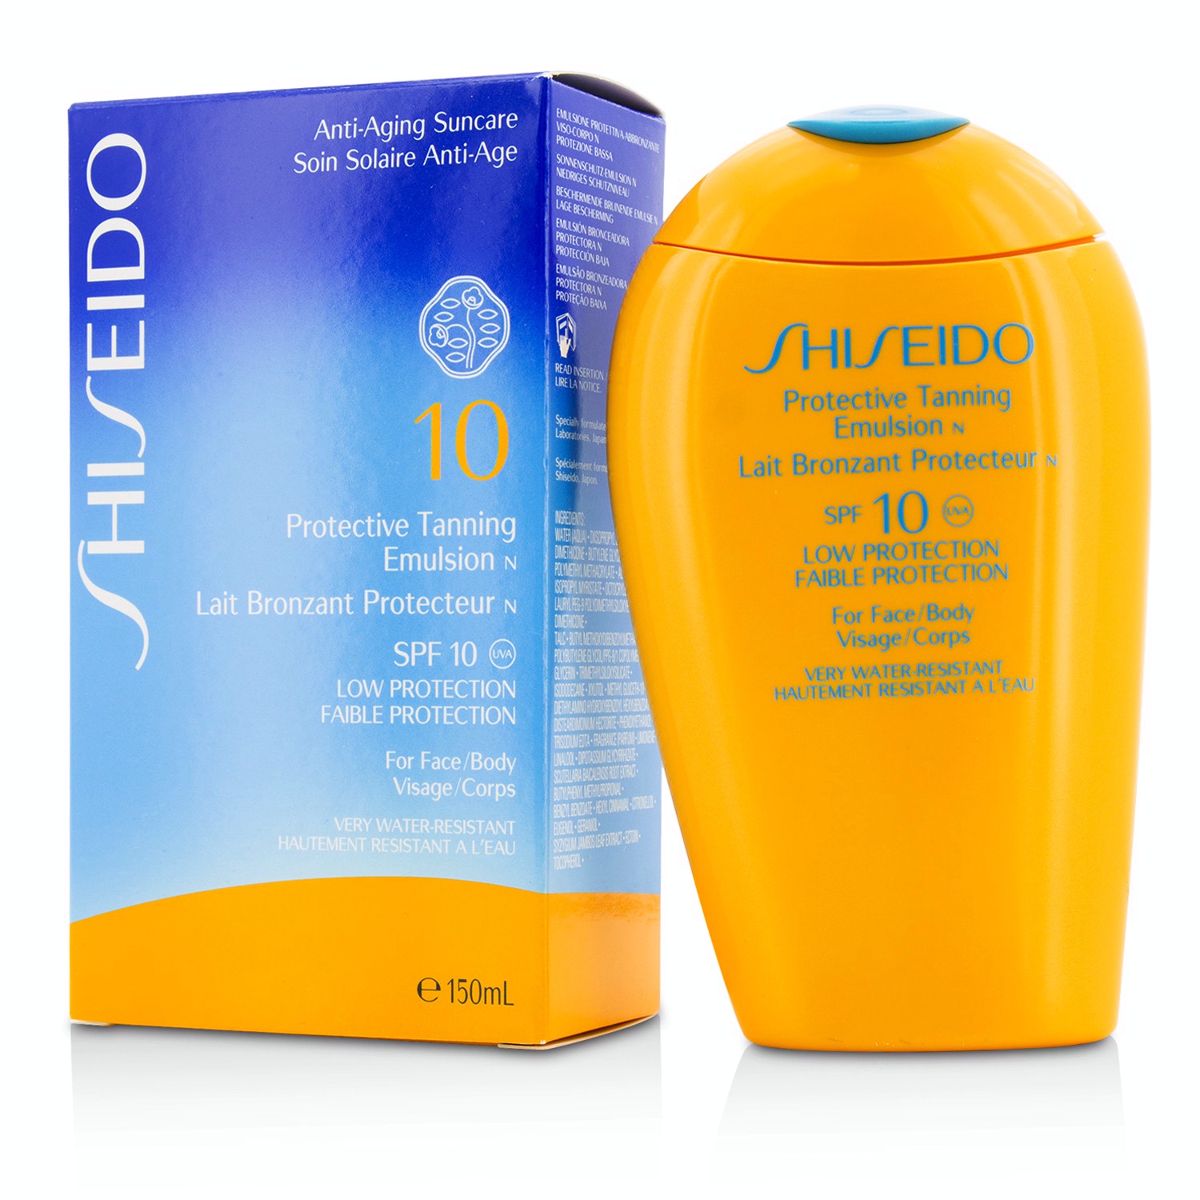 Protective Tanning Emulsion N SPF 10 (For Face  Body) Shiseido Image